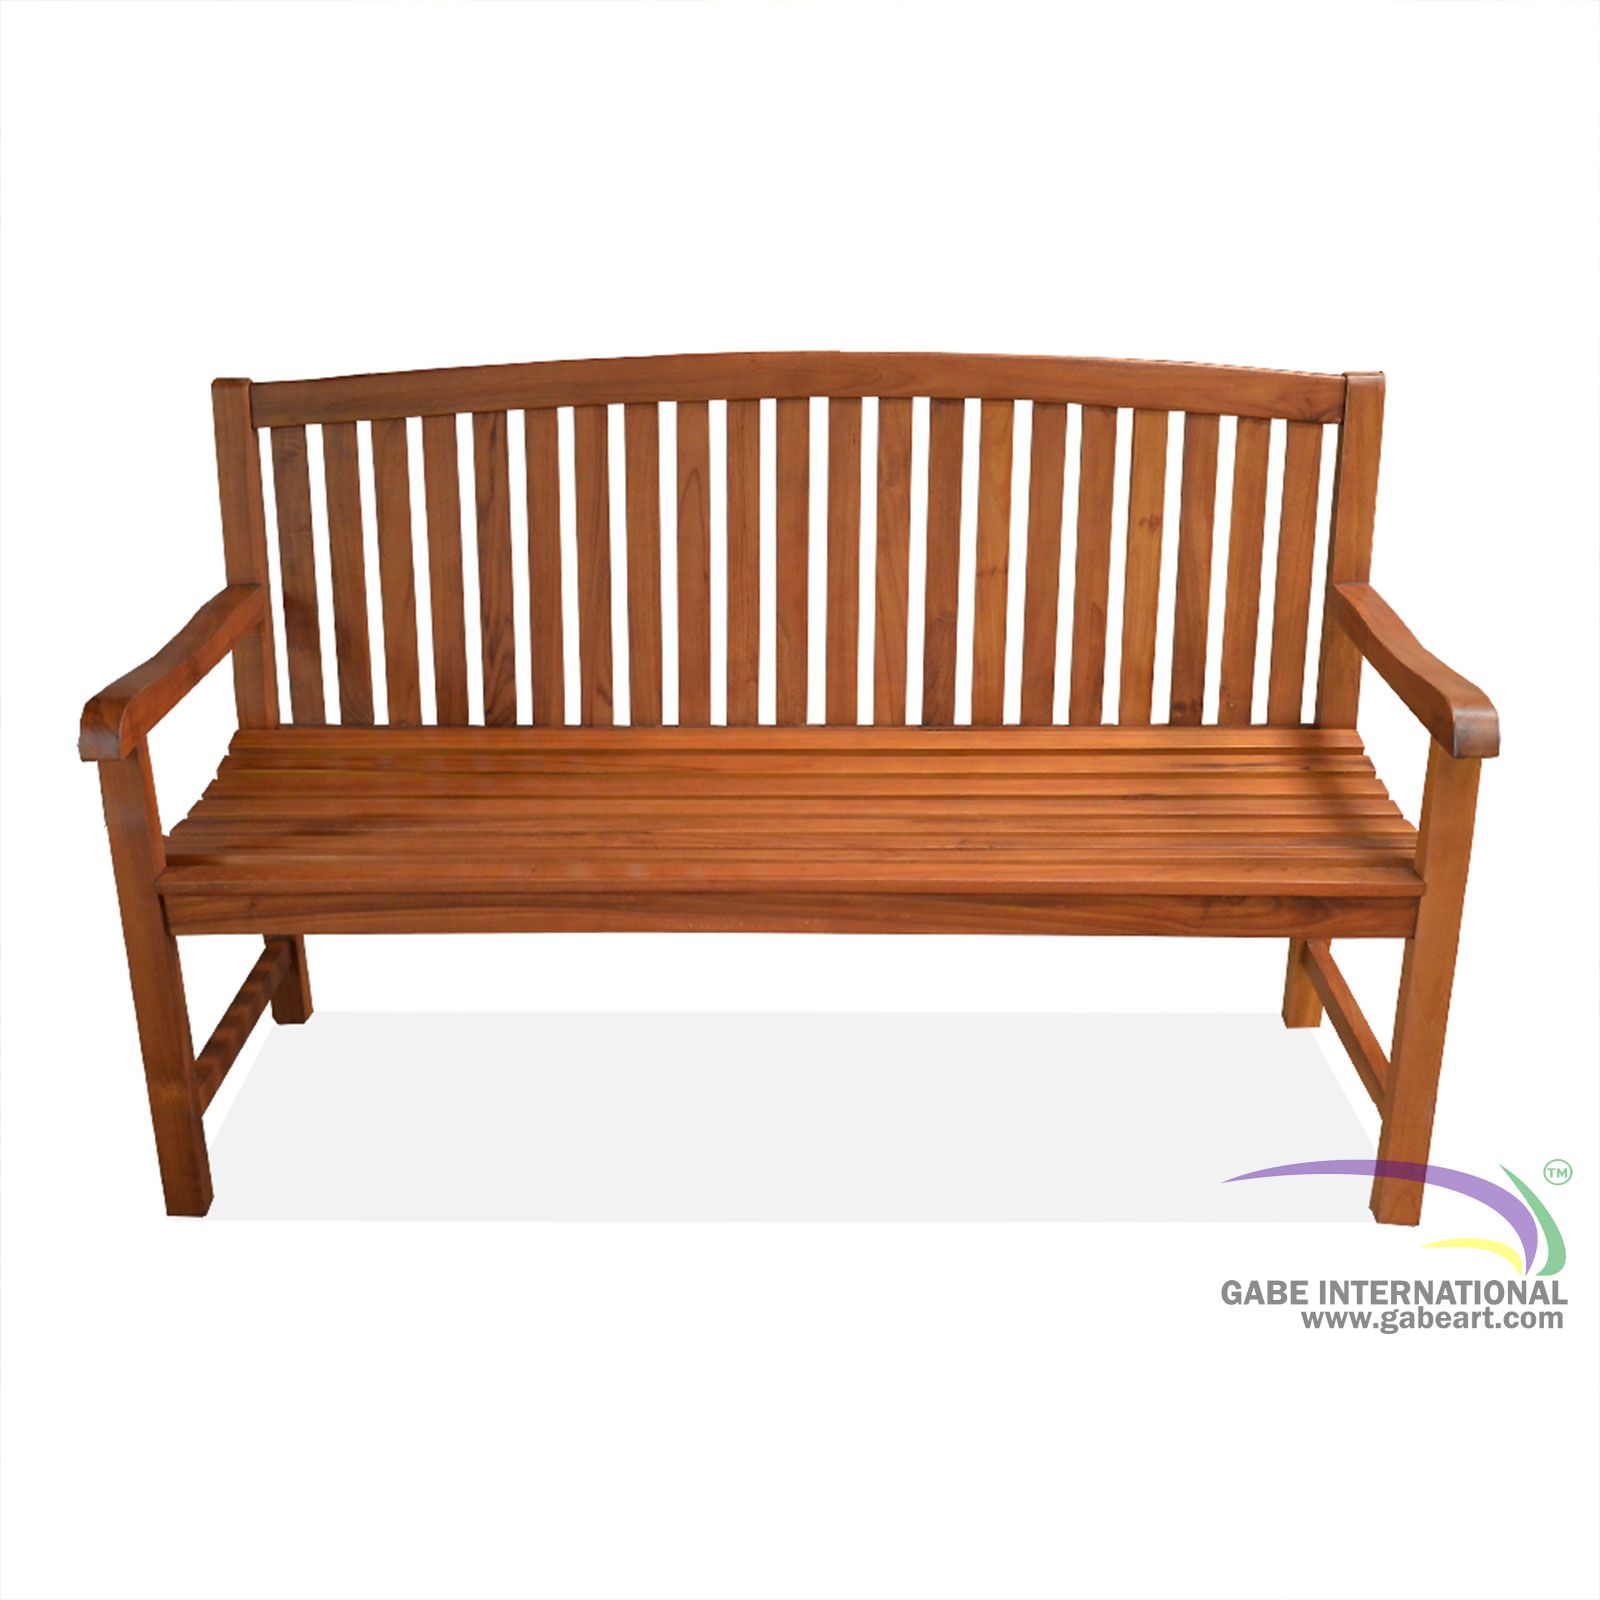 Portlan teak gardern bench wooden slats seat detail